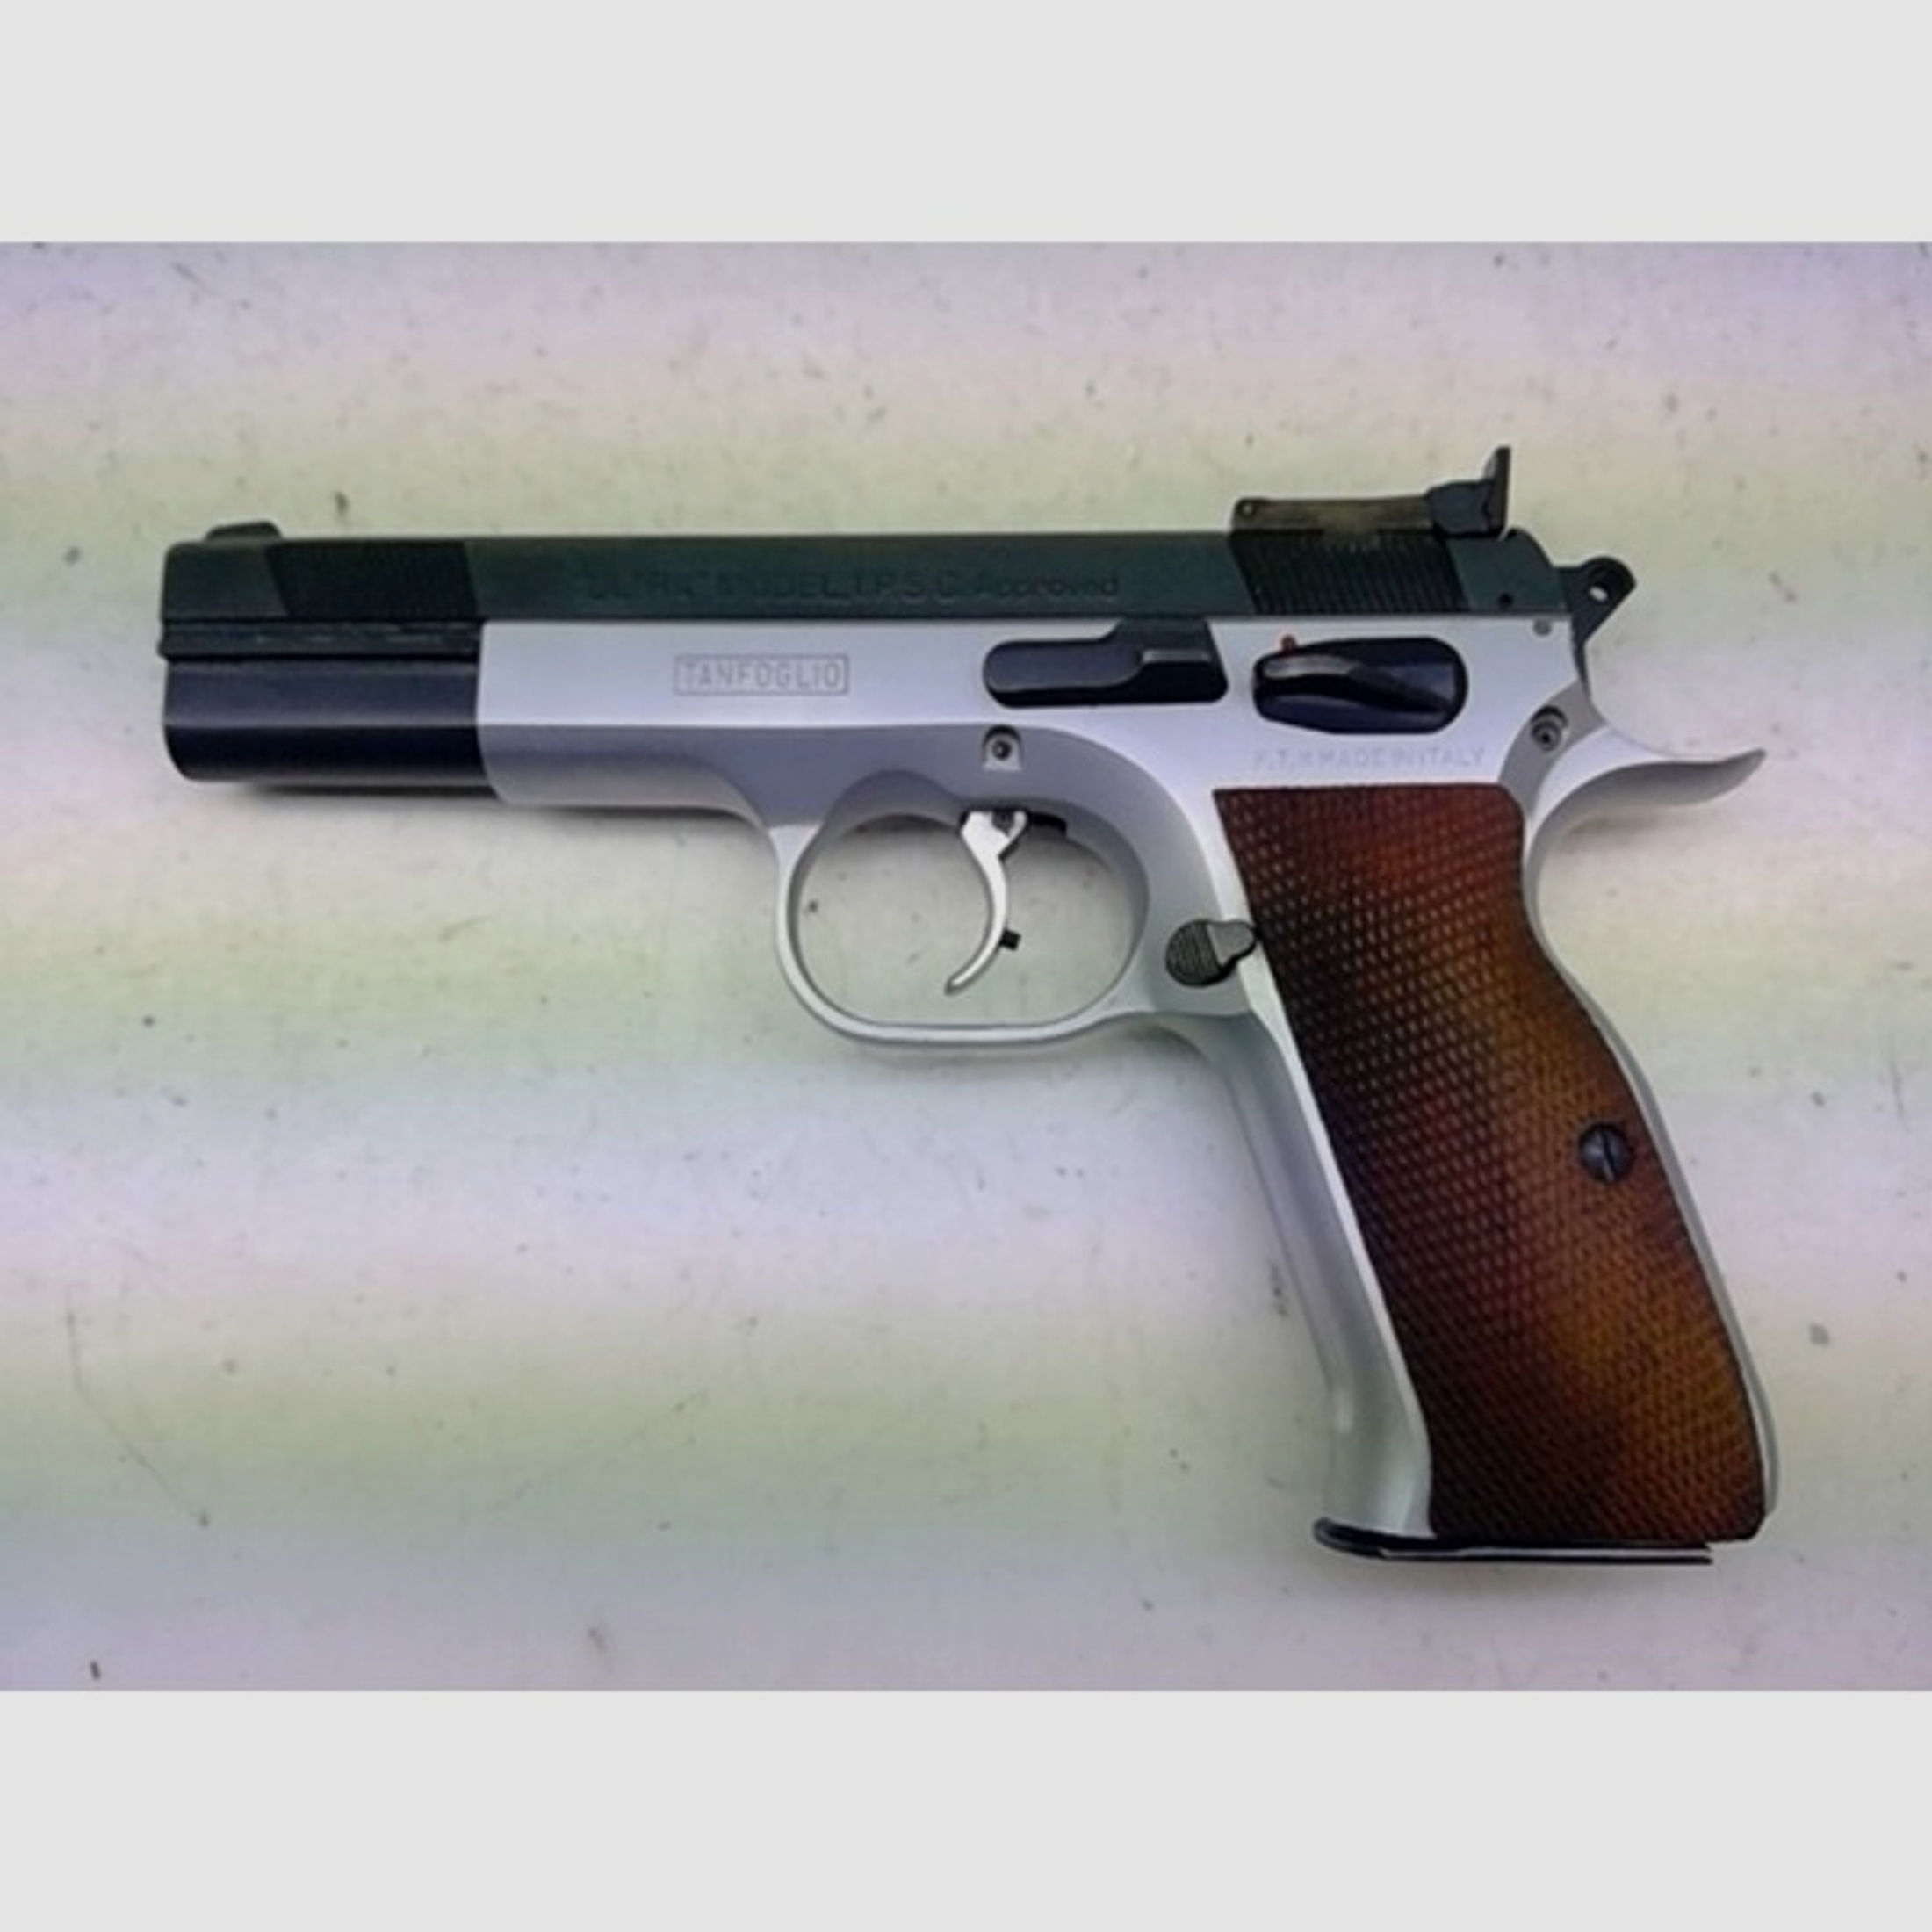 Pistole Tanfoglio Ultra Mod. I.P.S.C. Approved im Kaliber 9mm Luger gebraucht